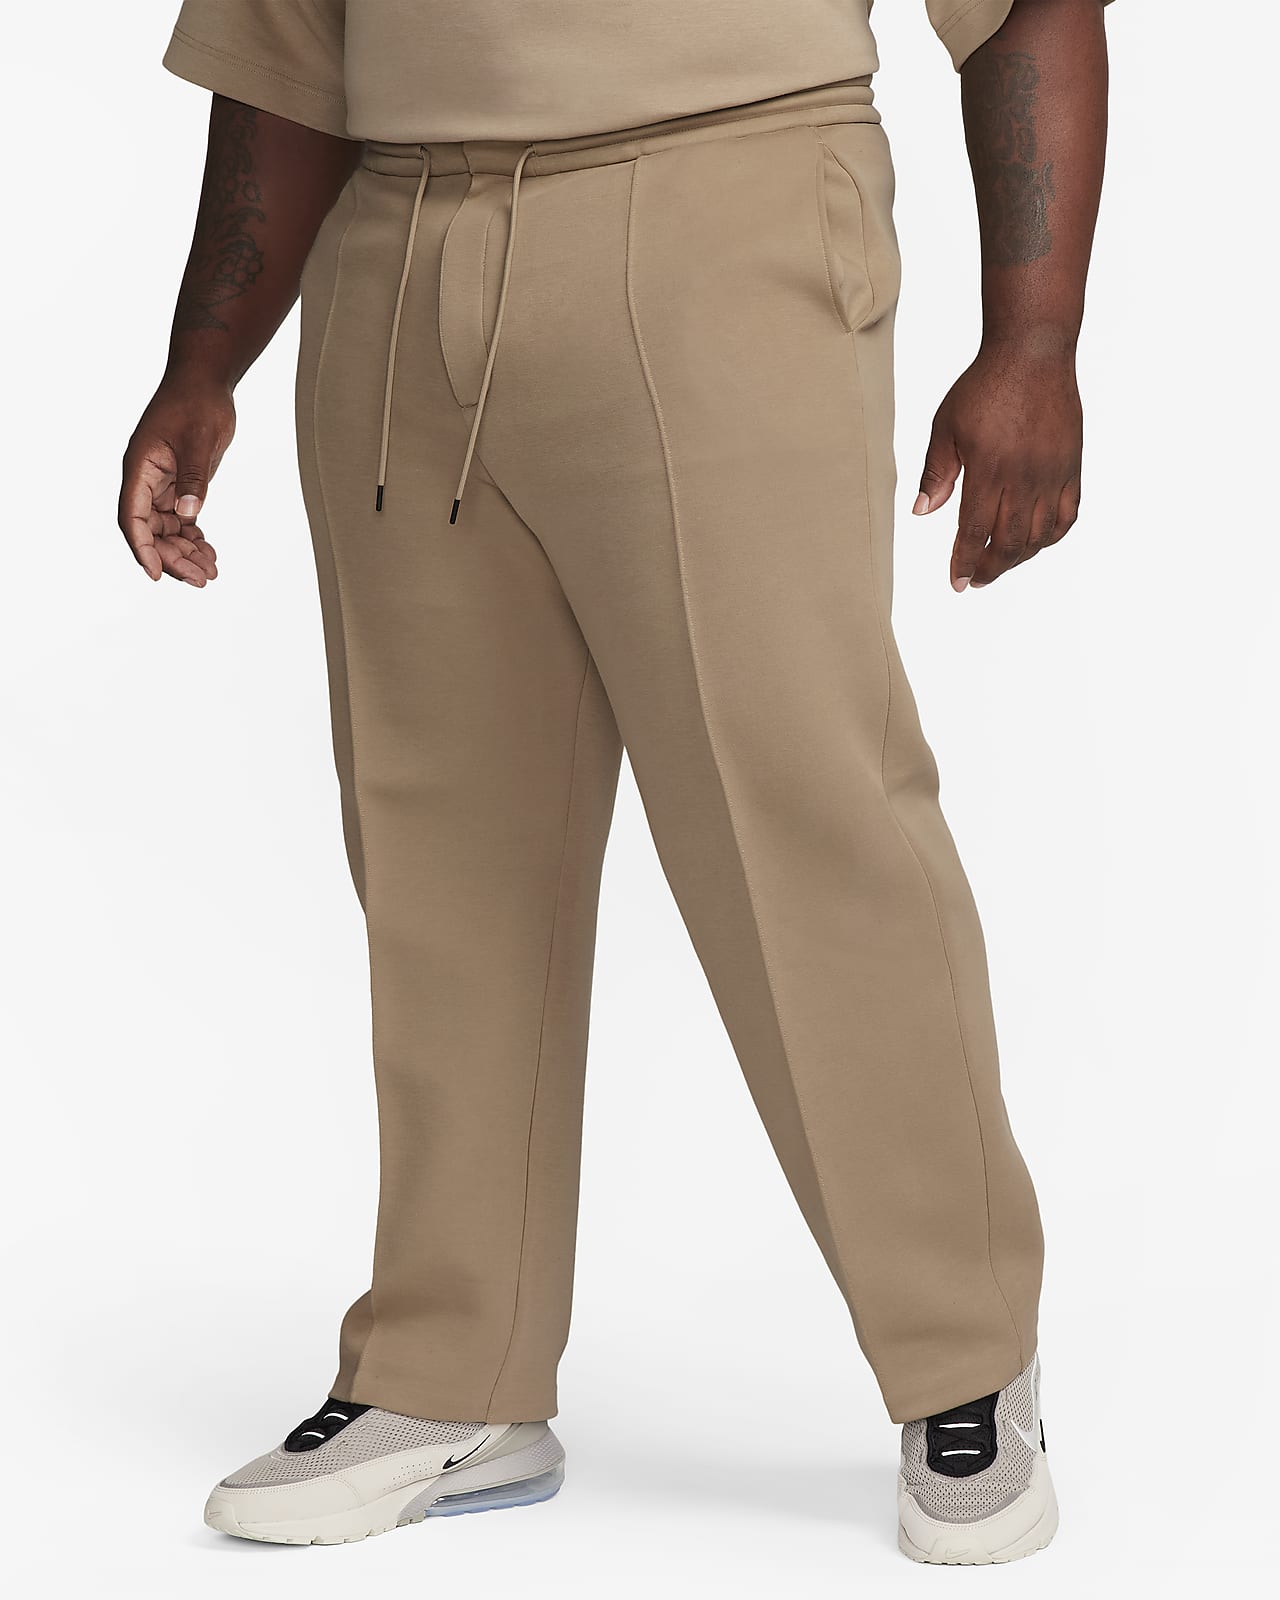 Jogger Pants Nike Sportswear Therma-FIT Tech Pack Men's Winterized Pants  Black/ Black